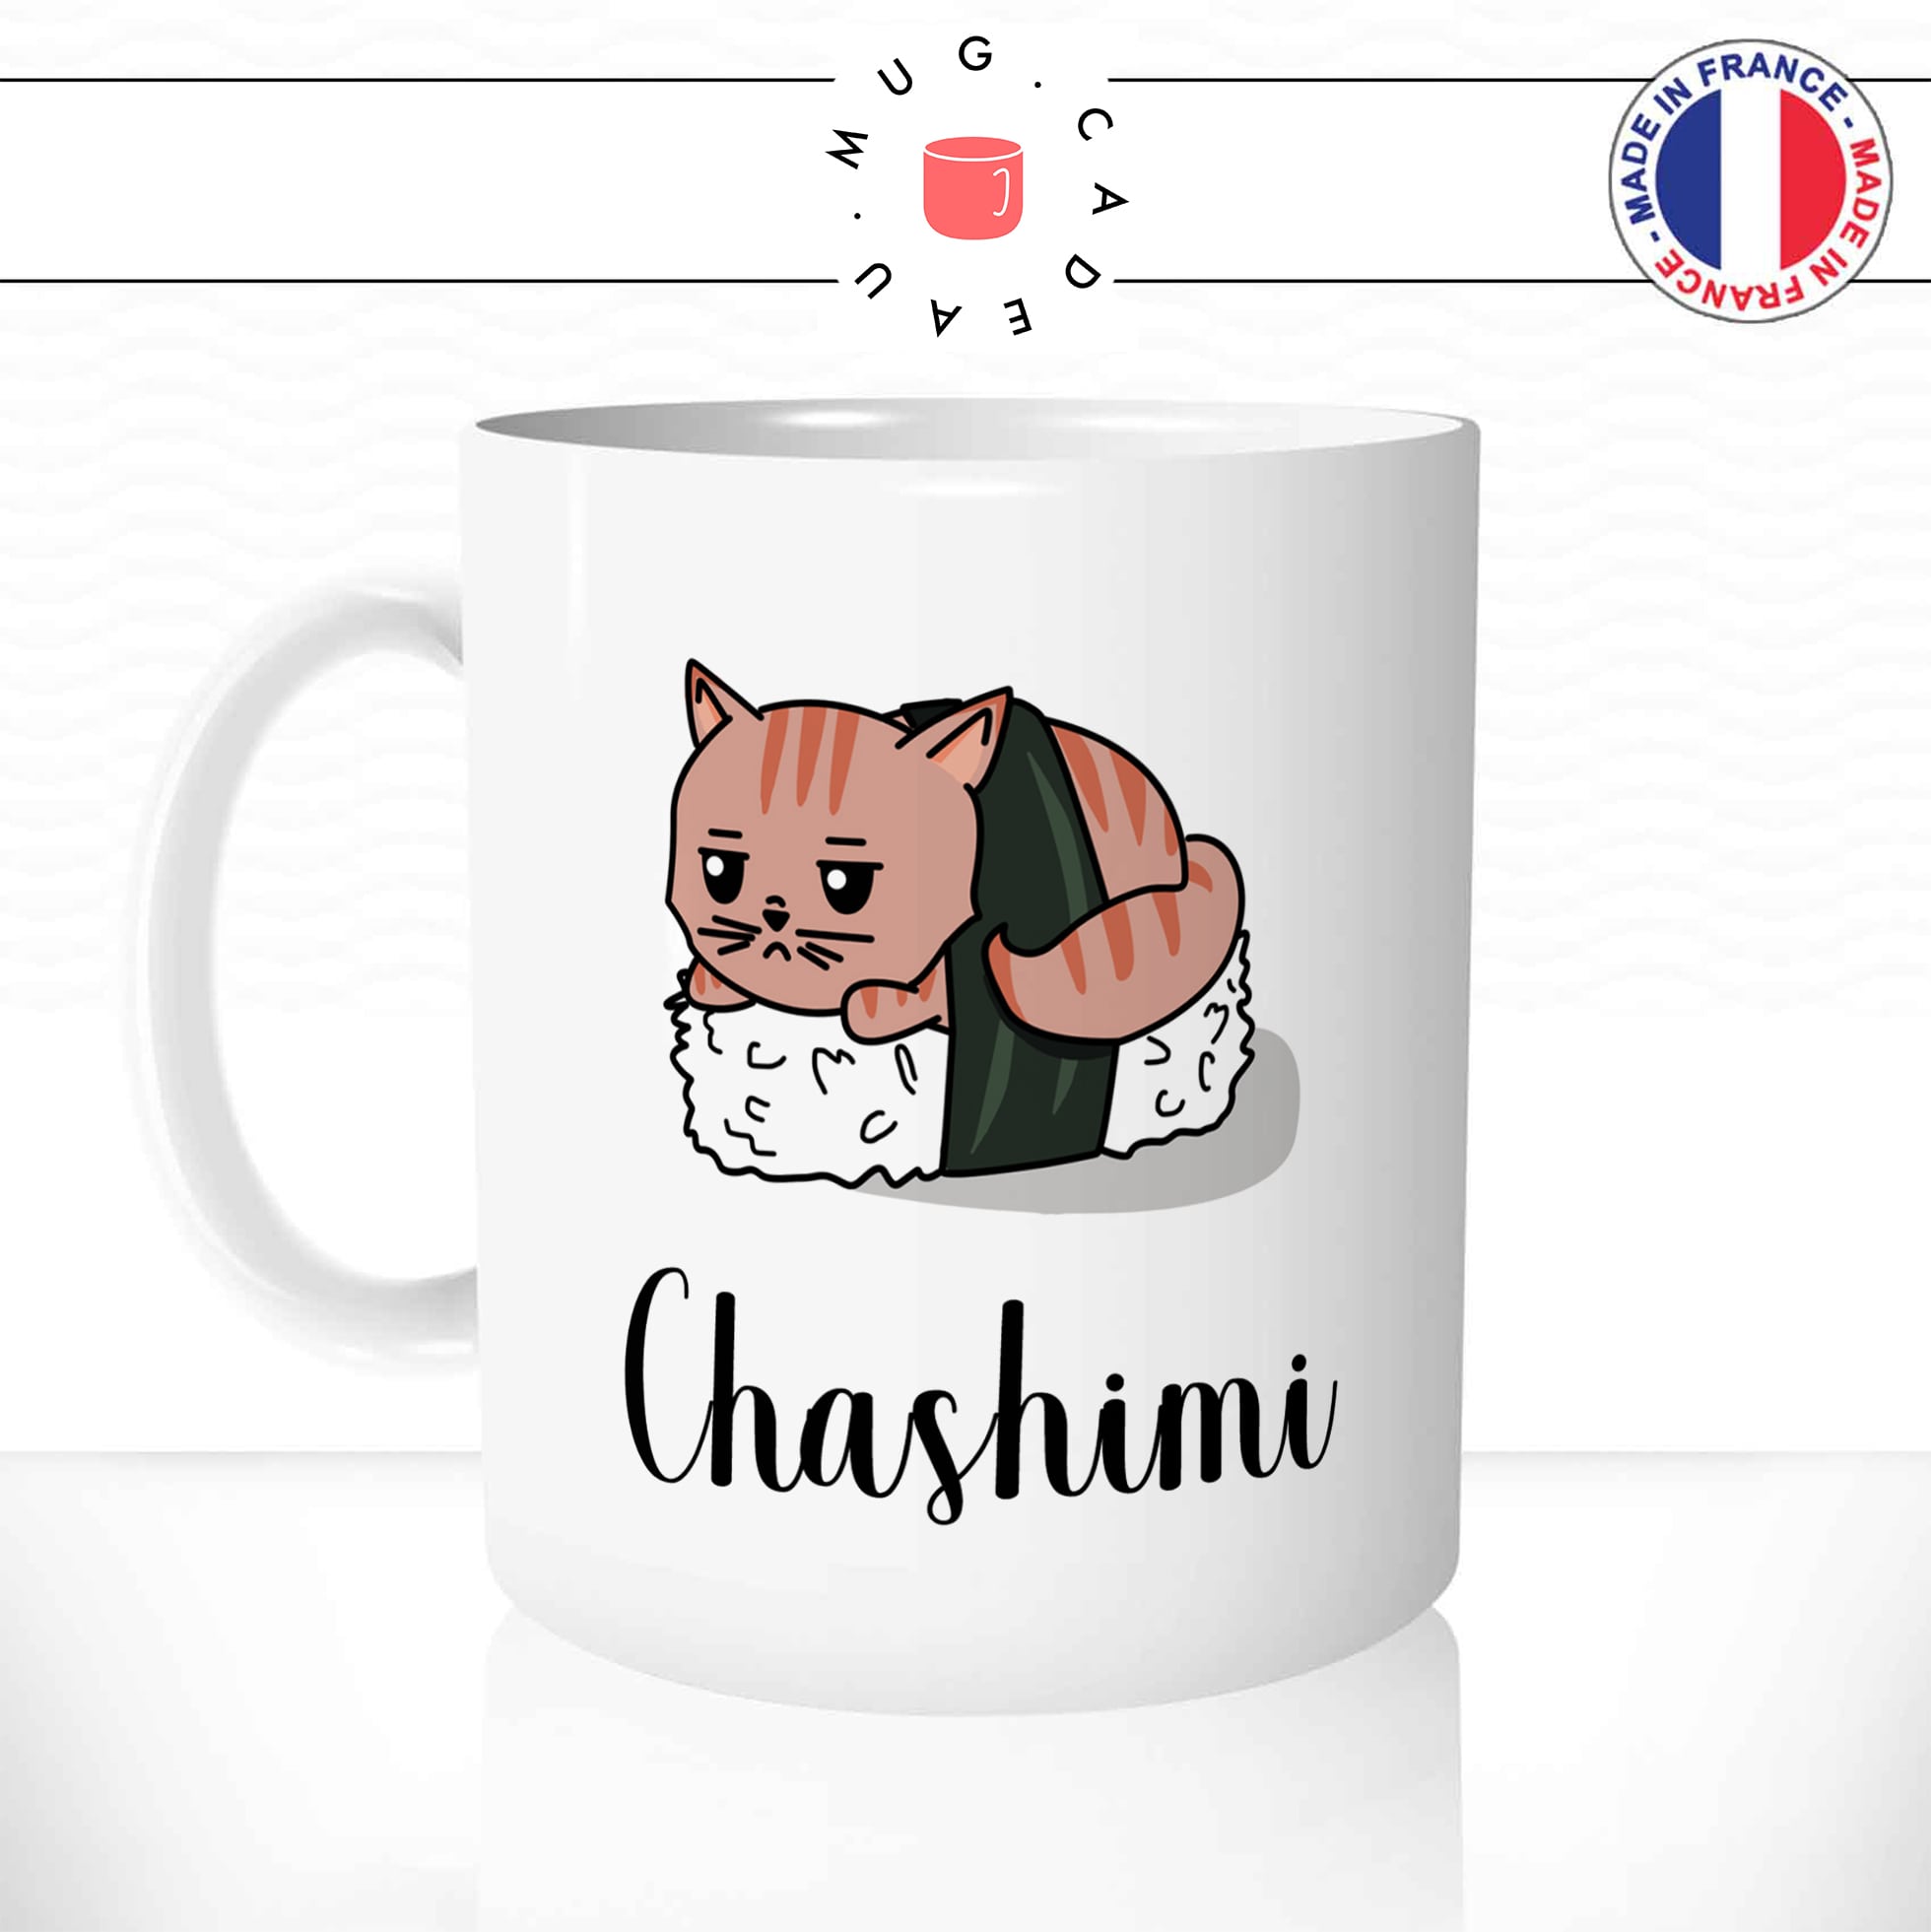 Mug Chashimi